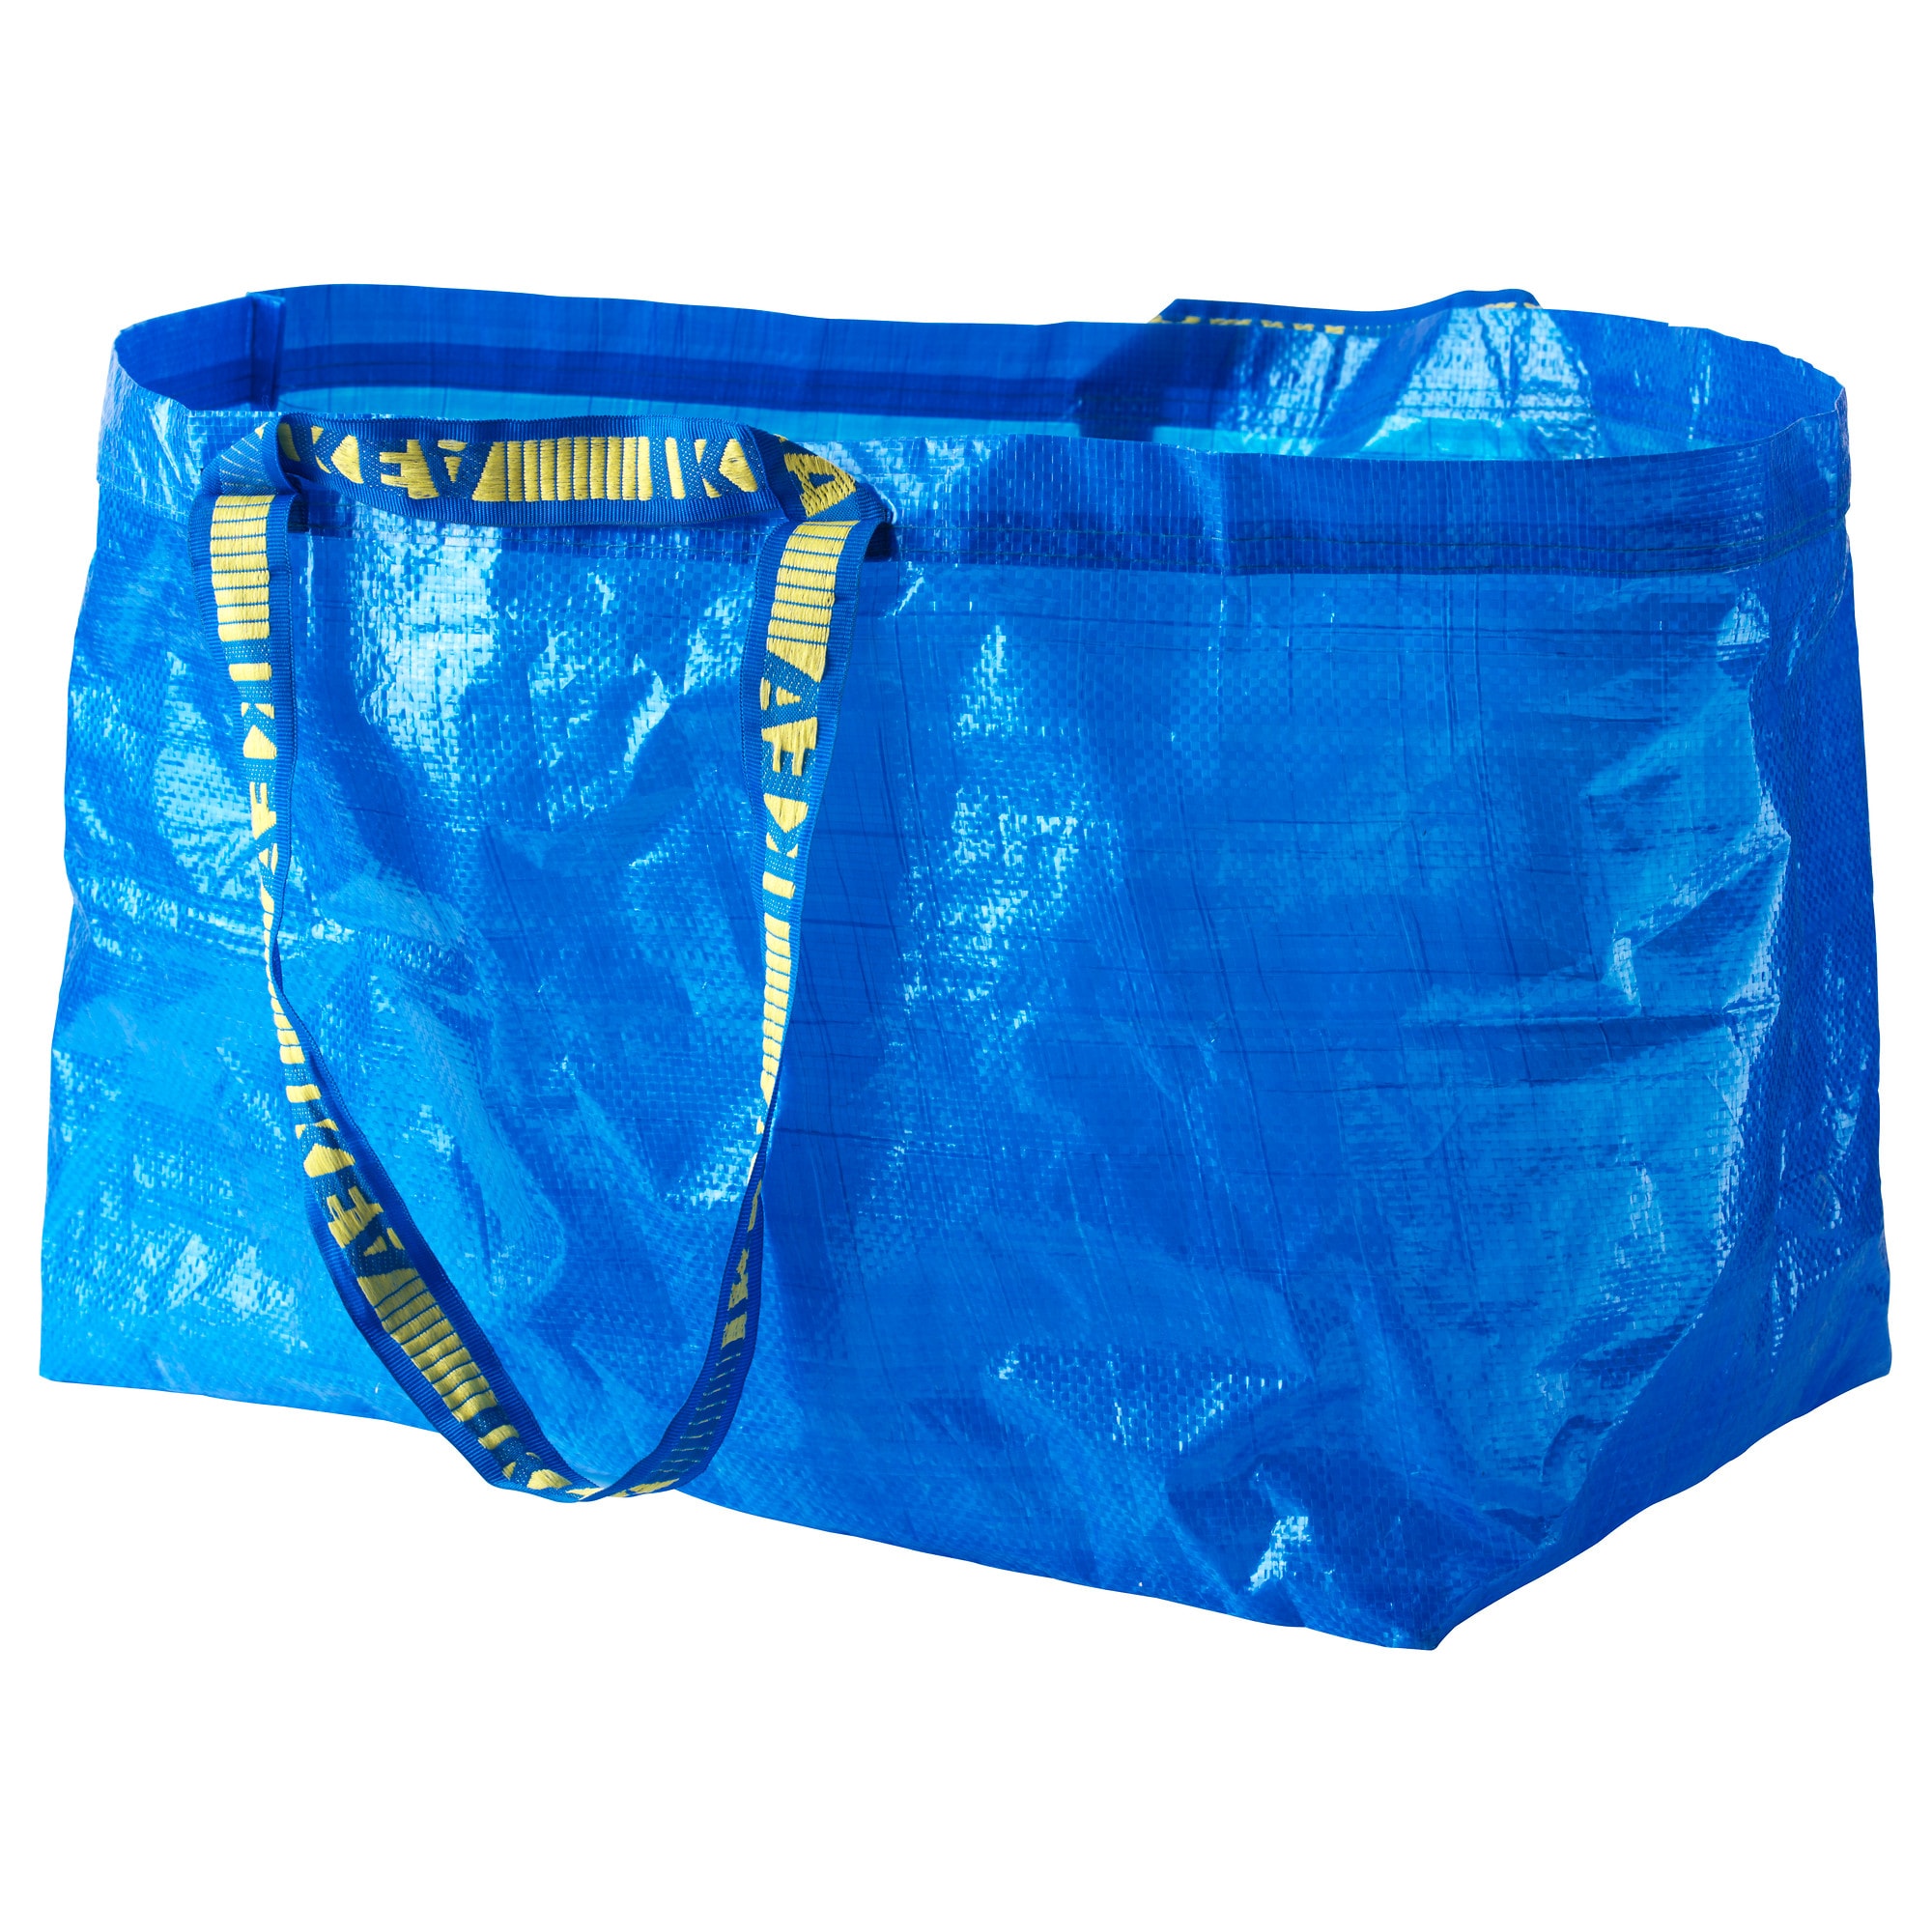 IKEAの青いバッグ